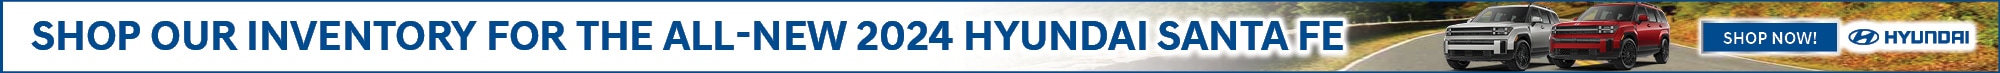 All New 2024 Hyundai Santa Fe